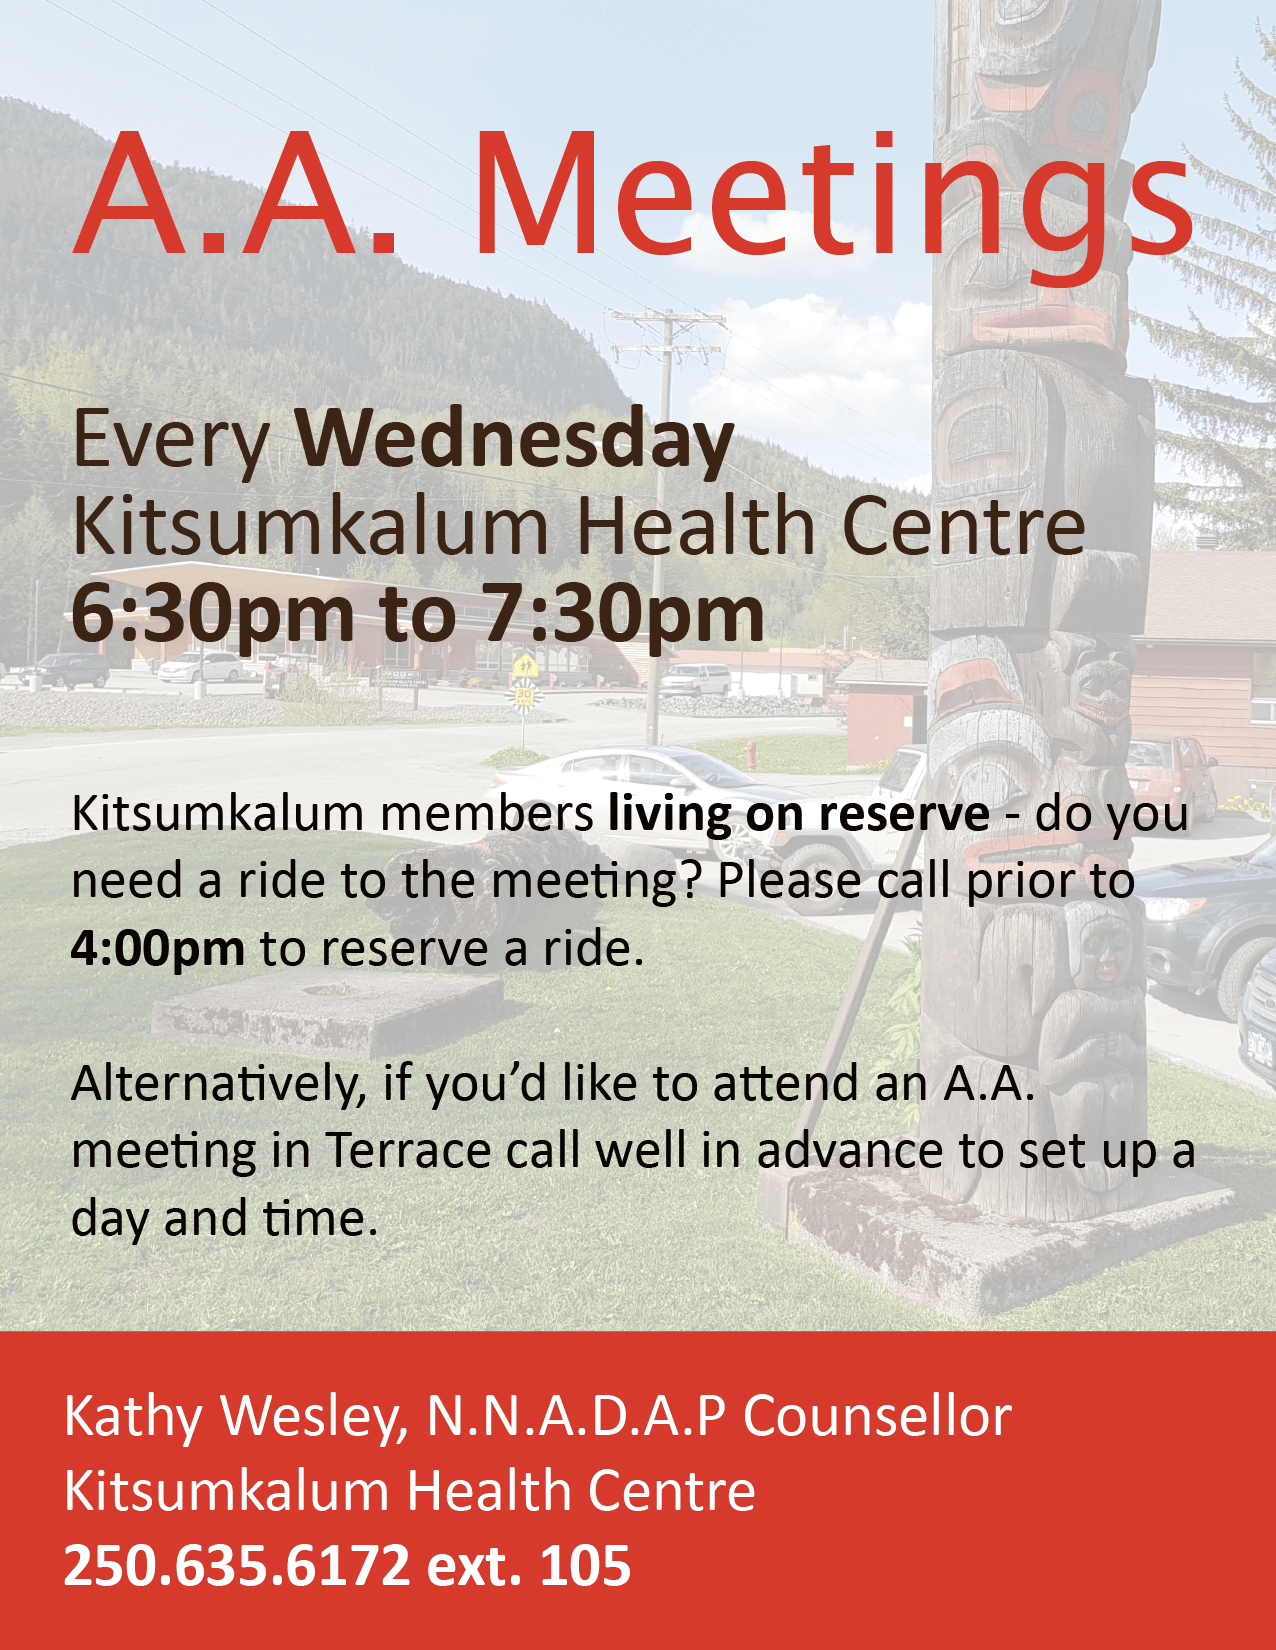 Wednesday AA Meetings at Kitsumkalum Health